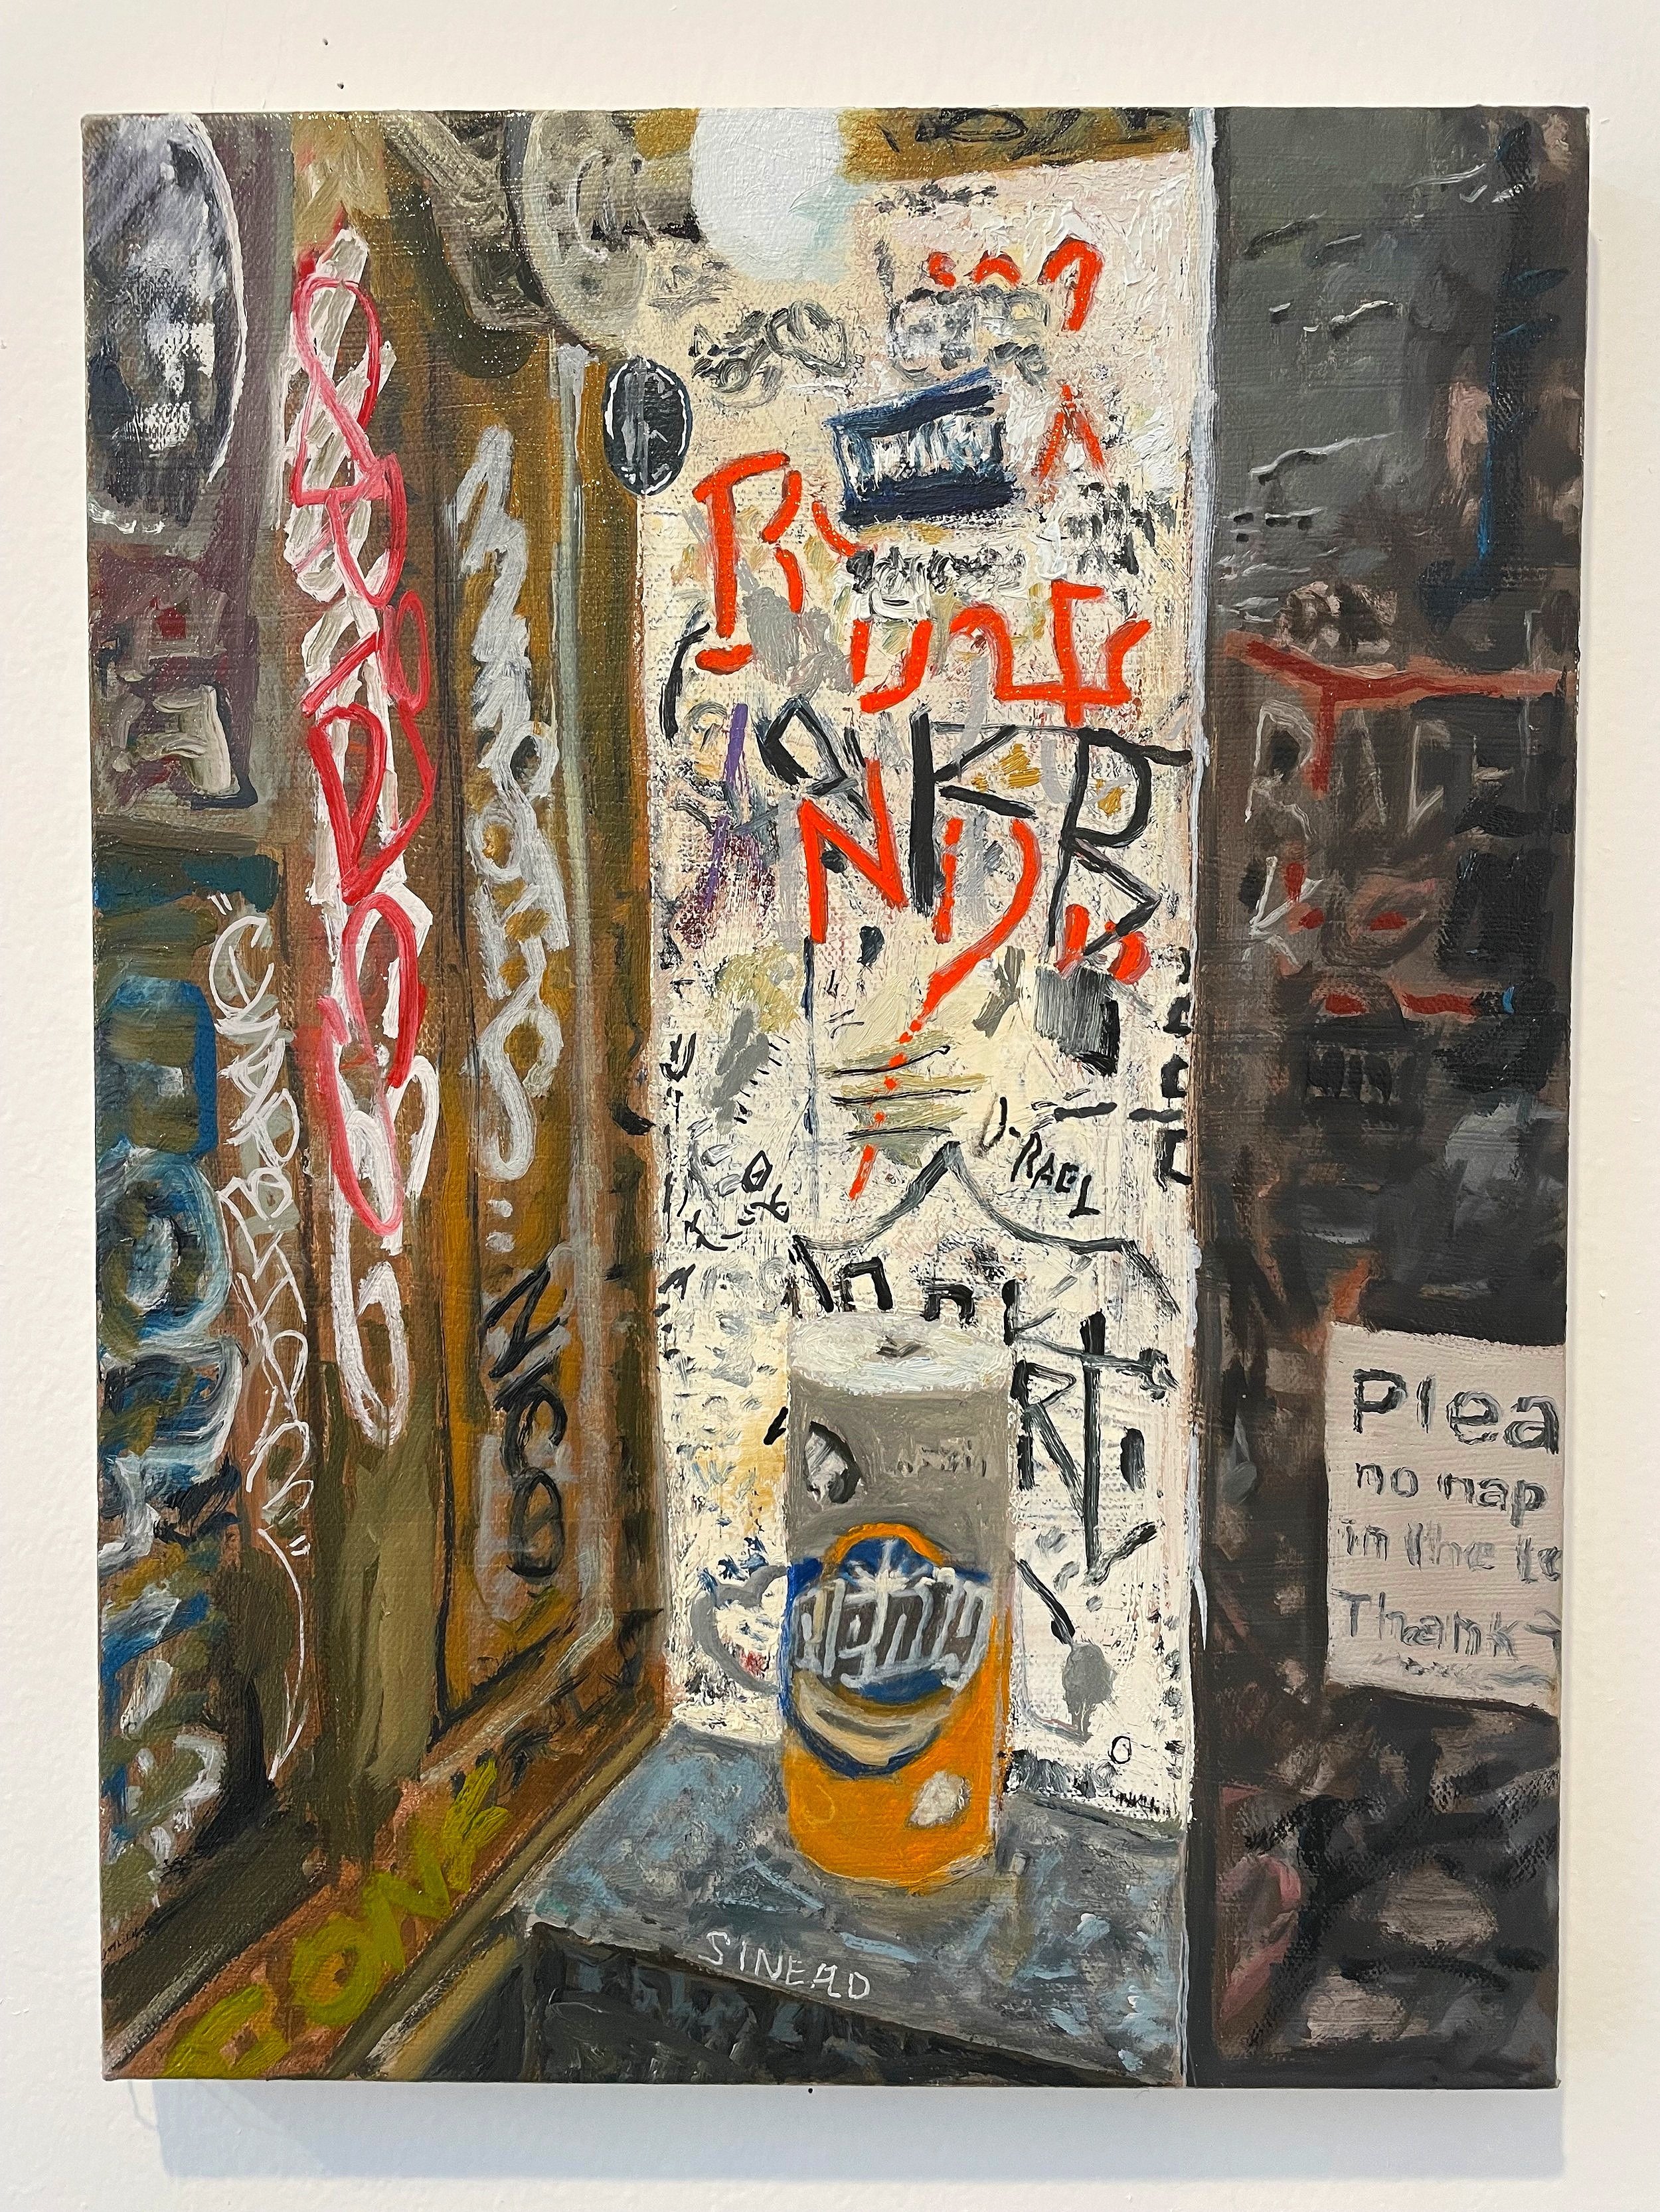   Nancy Whiskey (Sinhead)   16” x 12”  oil on canvas  2023 